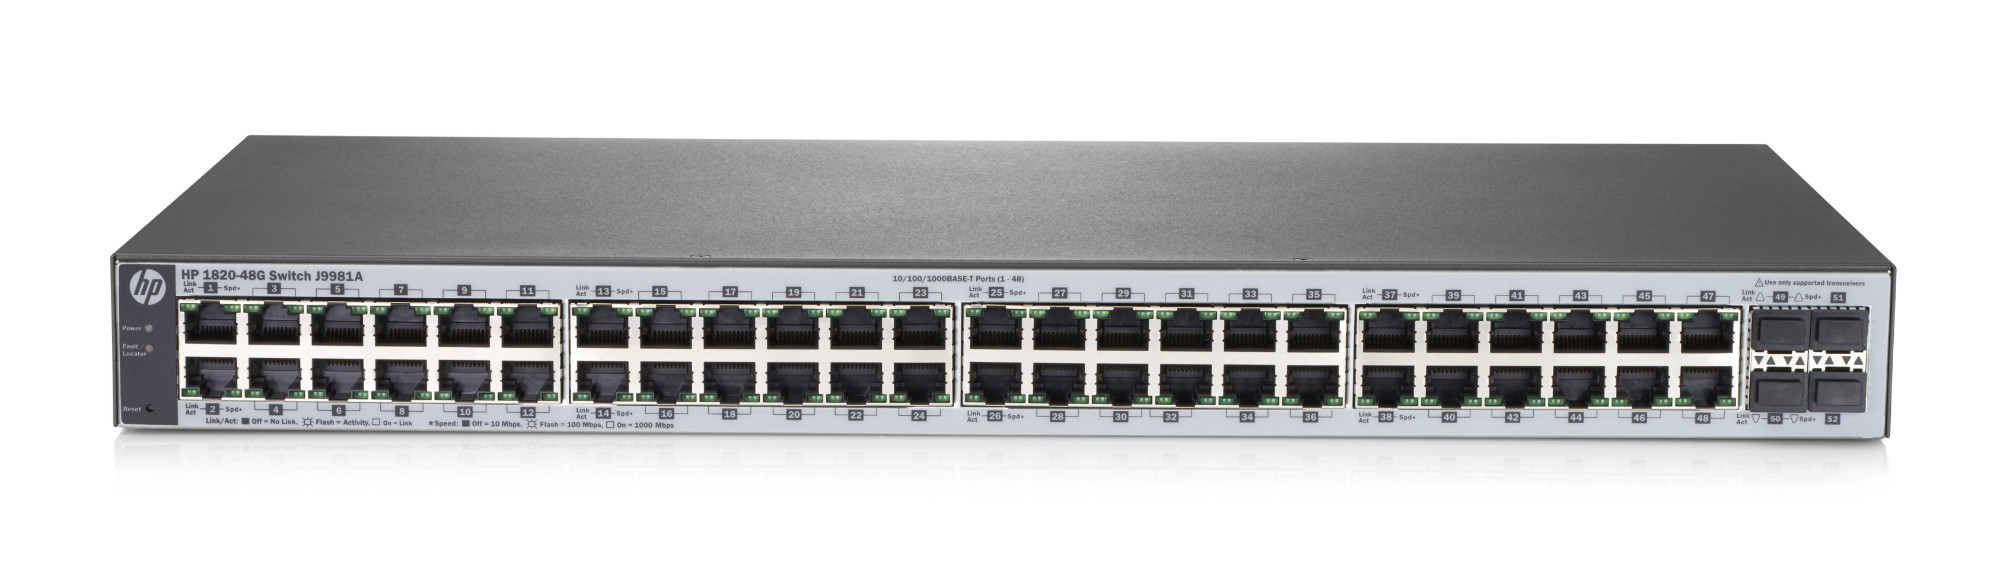 J9981A-RFB Hewlett-Packard Enterprise 1820-48G (GBE) 48-PORT WEB MANAGED ETHERNET NETWORK SWITCH